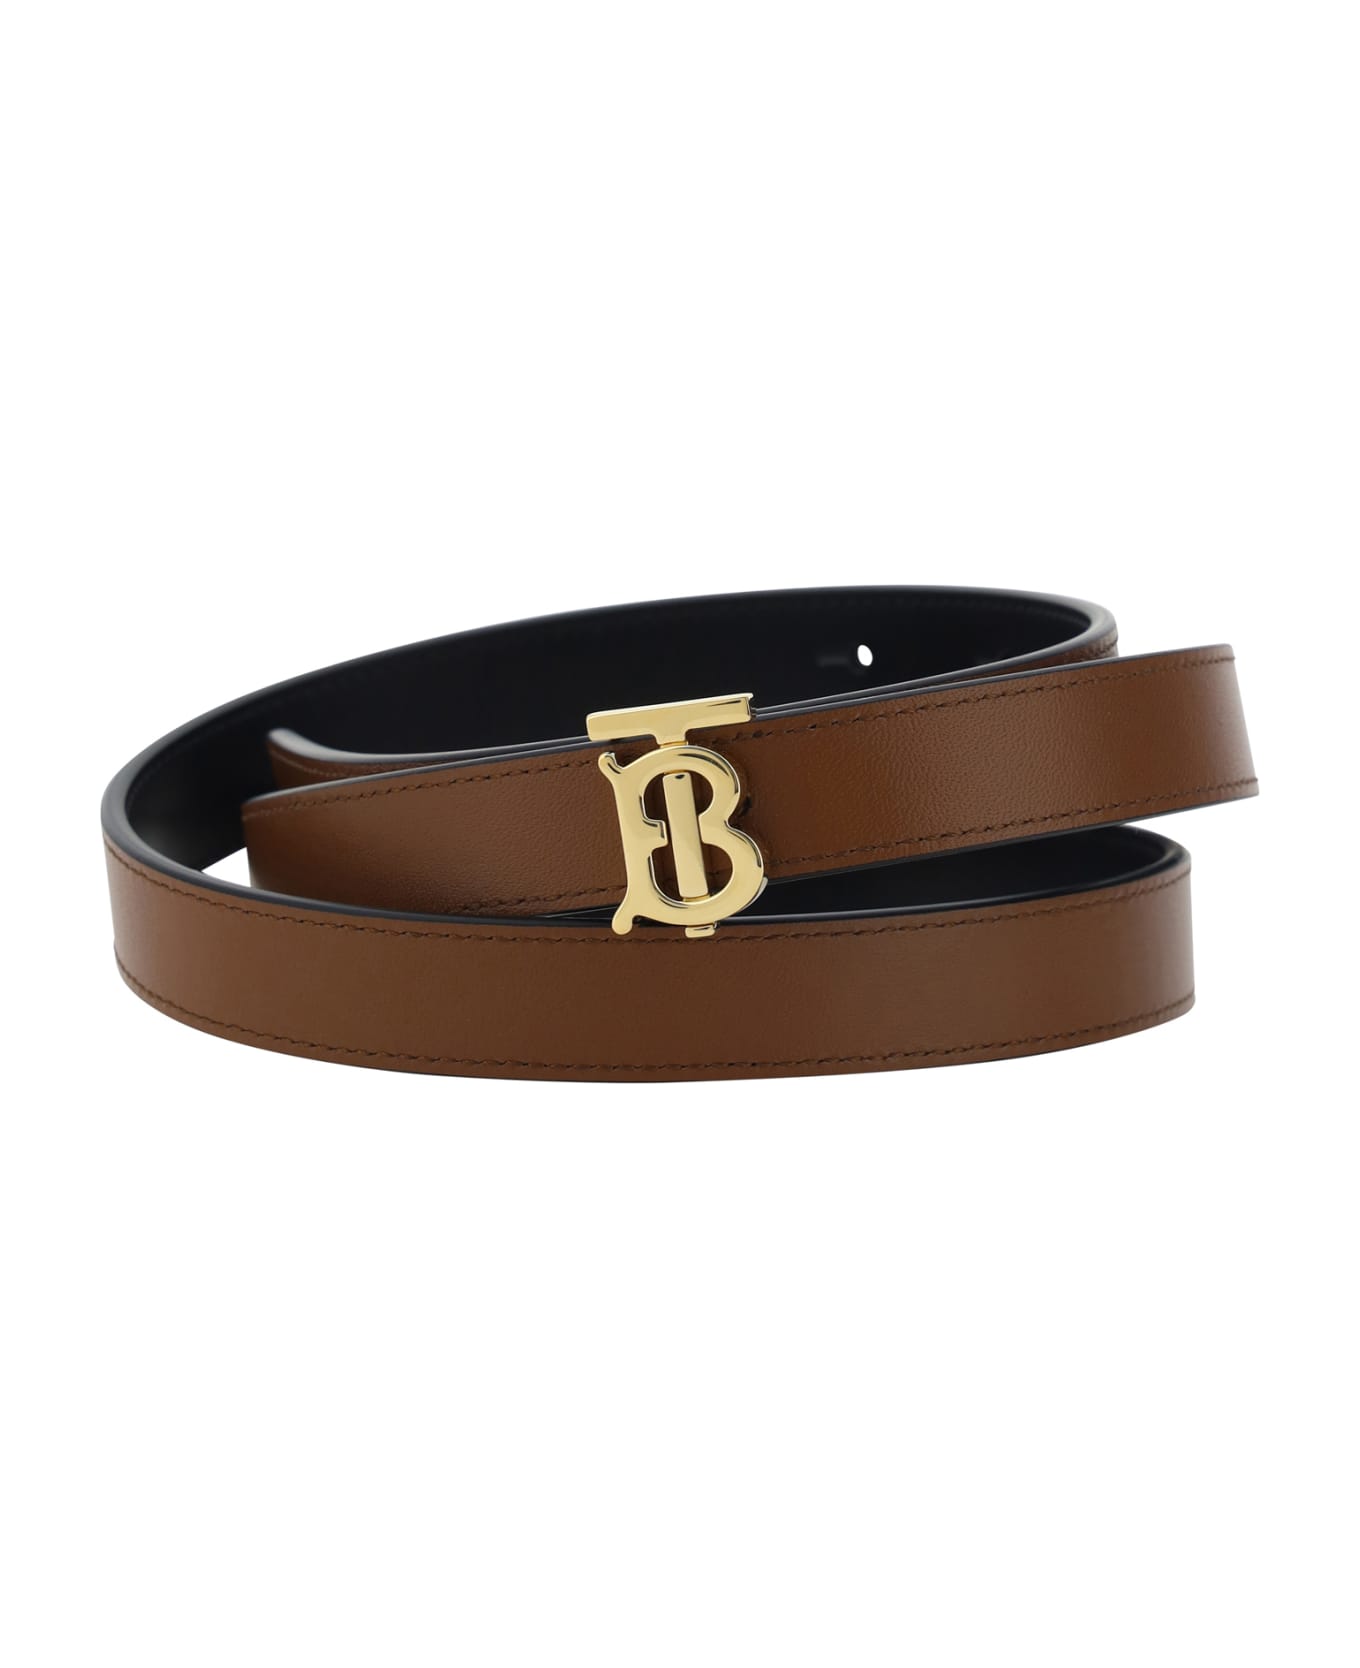 Burberry Belt - Black / Tan / Gold